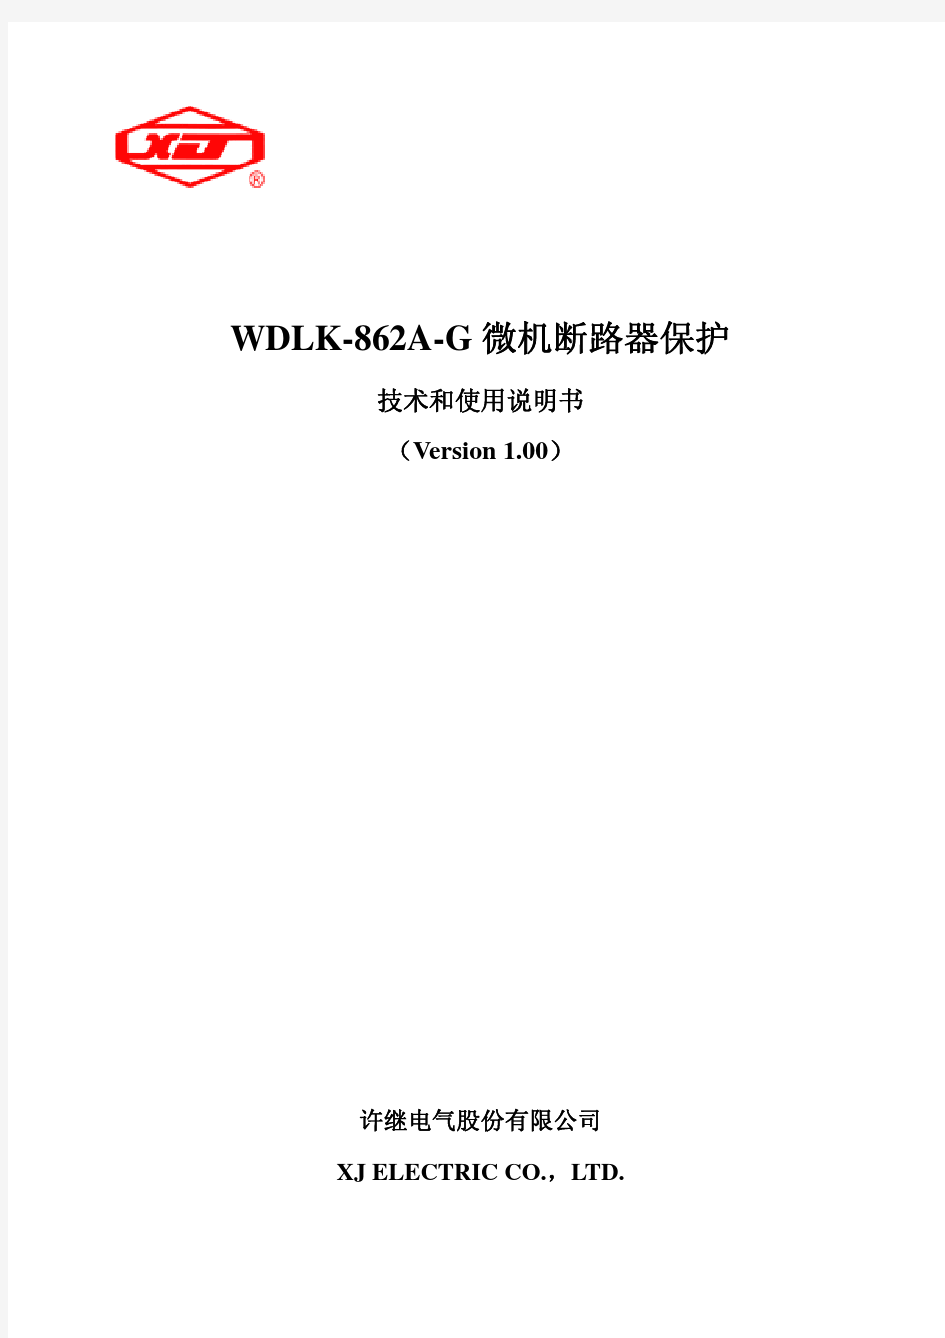 WDLK-862A-G断路器技术及使用说明书